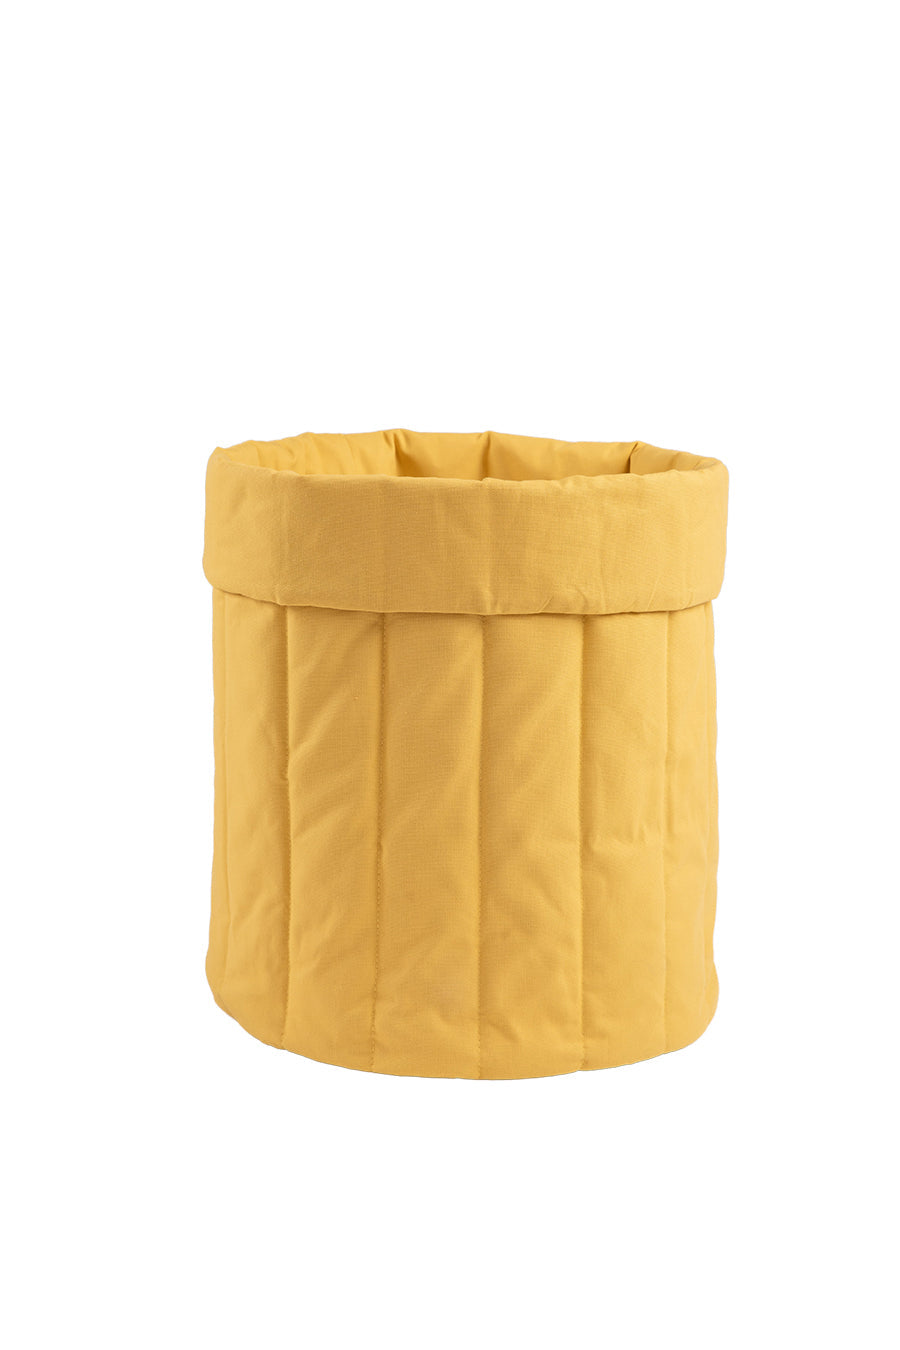 Plain Sunny Mustard Toy Bag Storage Wigiwama 